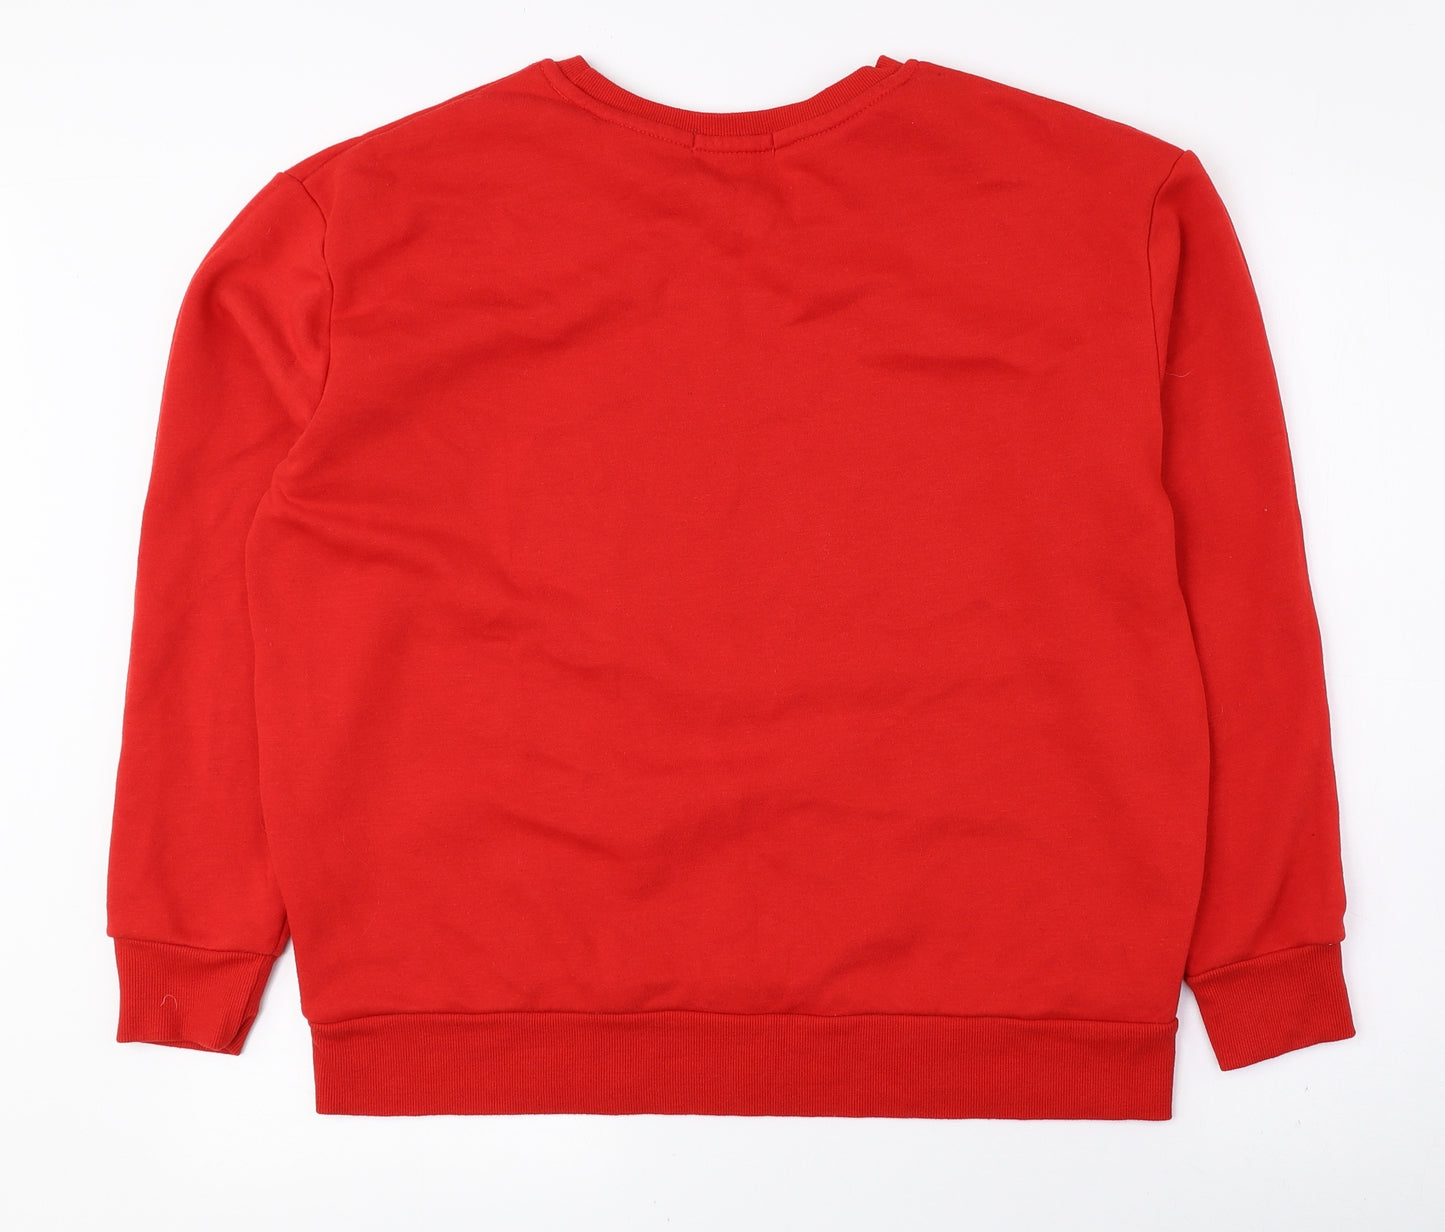 Primark Mens Red Polyester Pullover Sweatshirt Size M